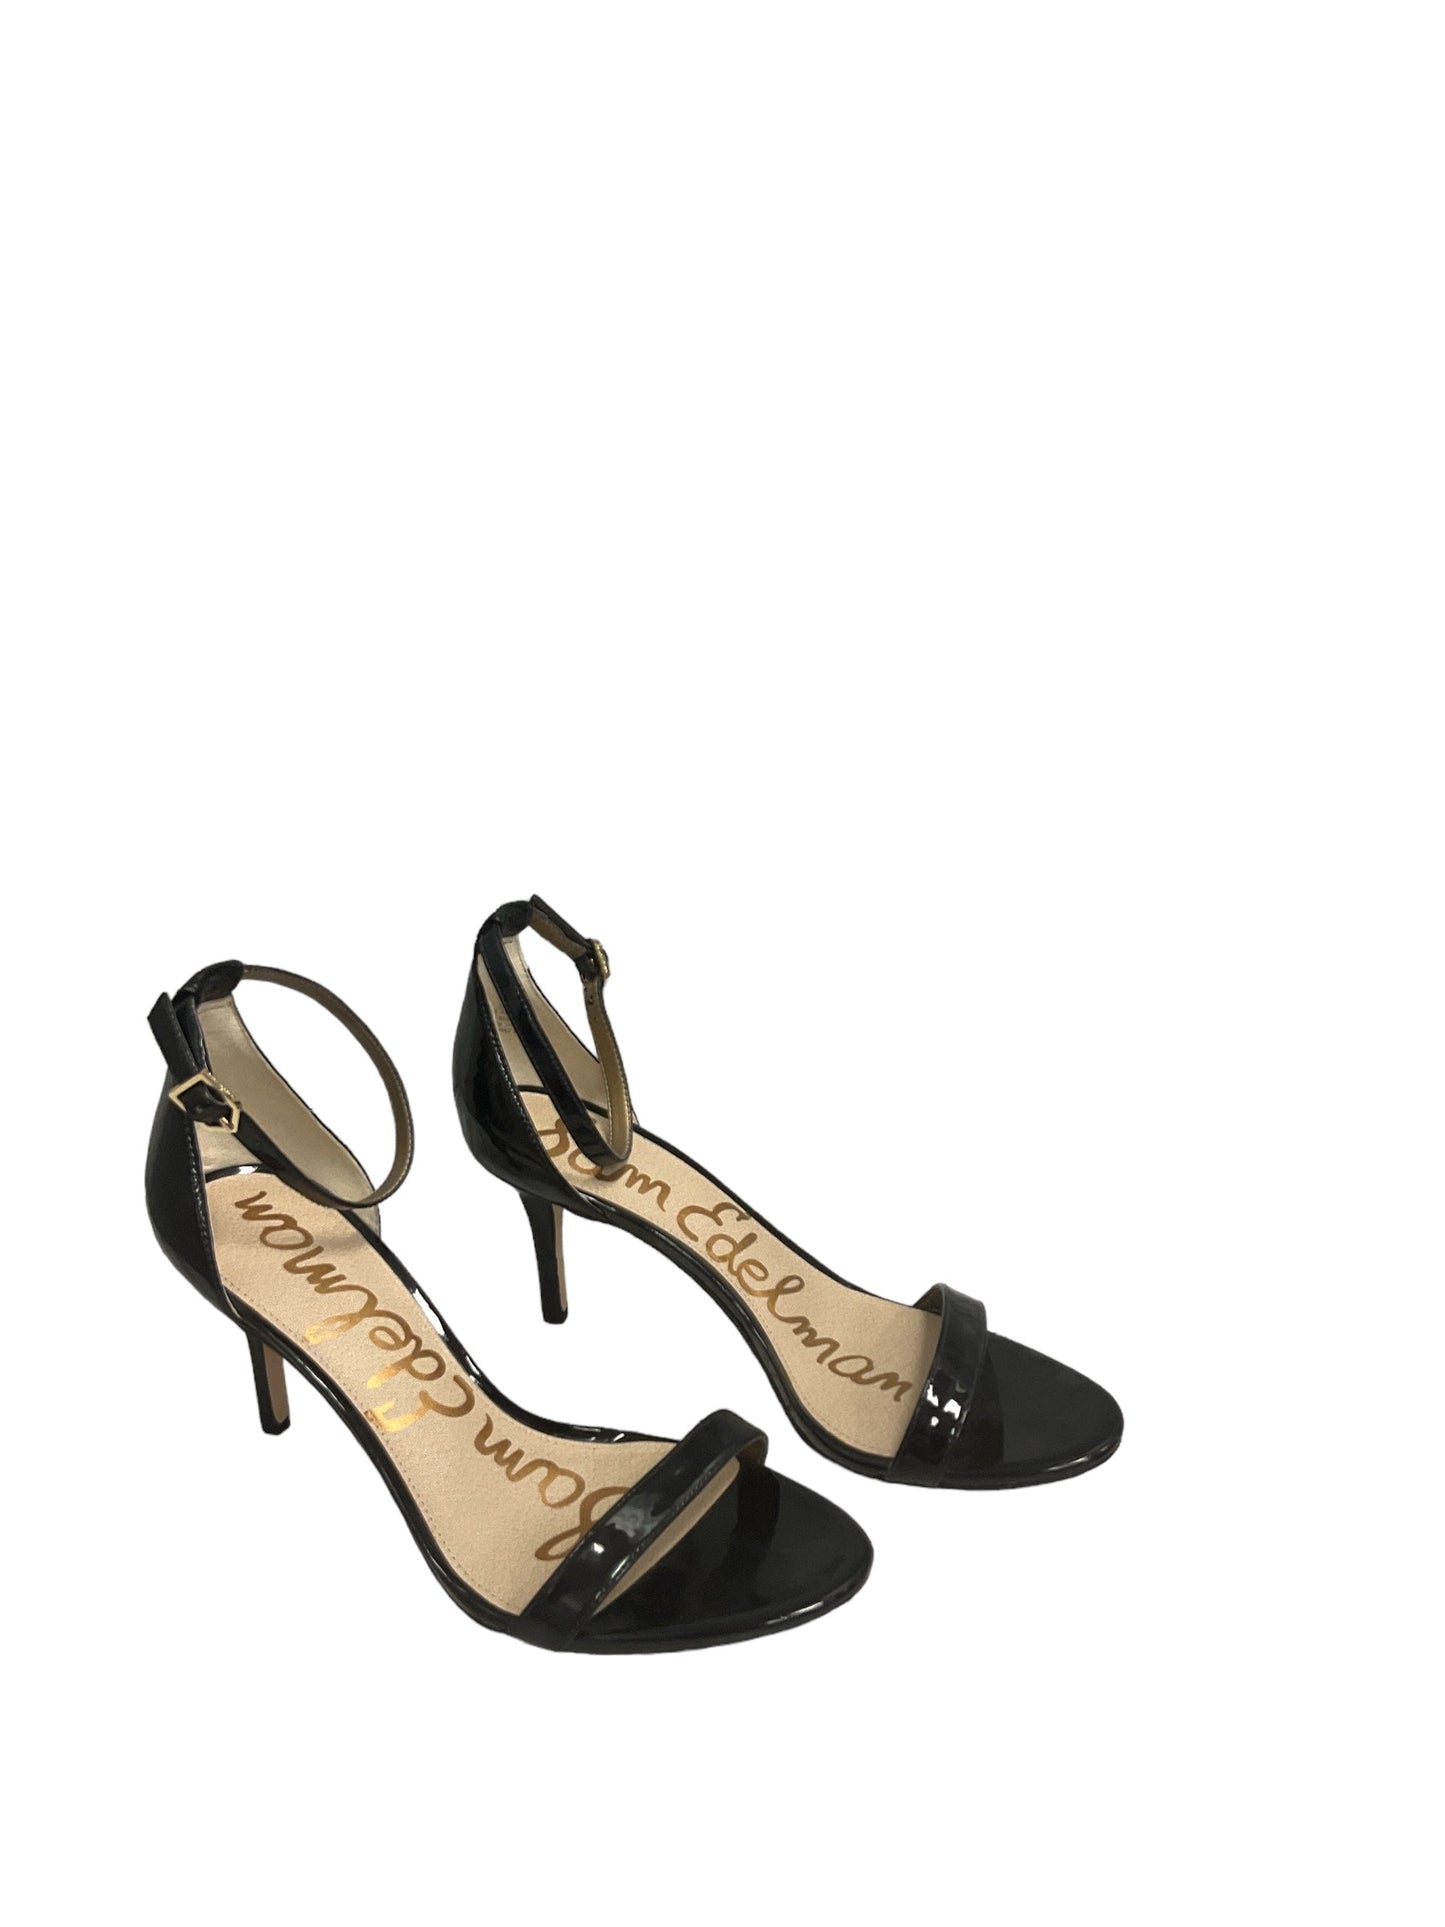 Shoes Heels Stiletto By Sam Edelman  Size: 8.5